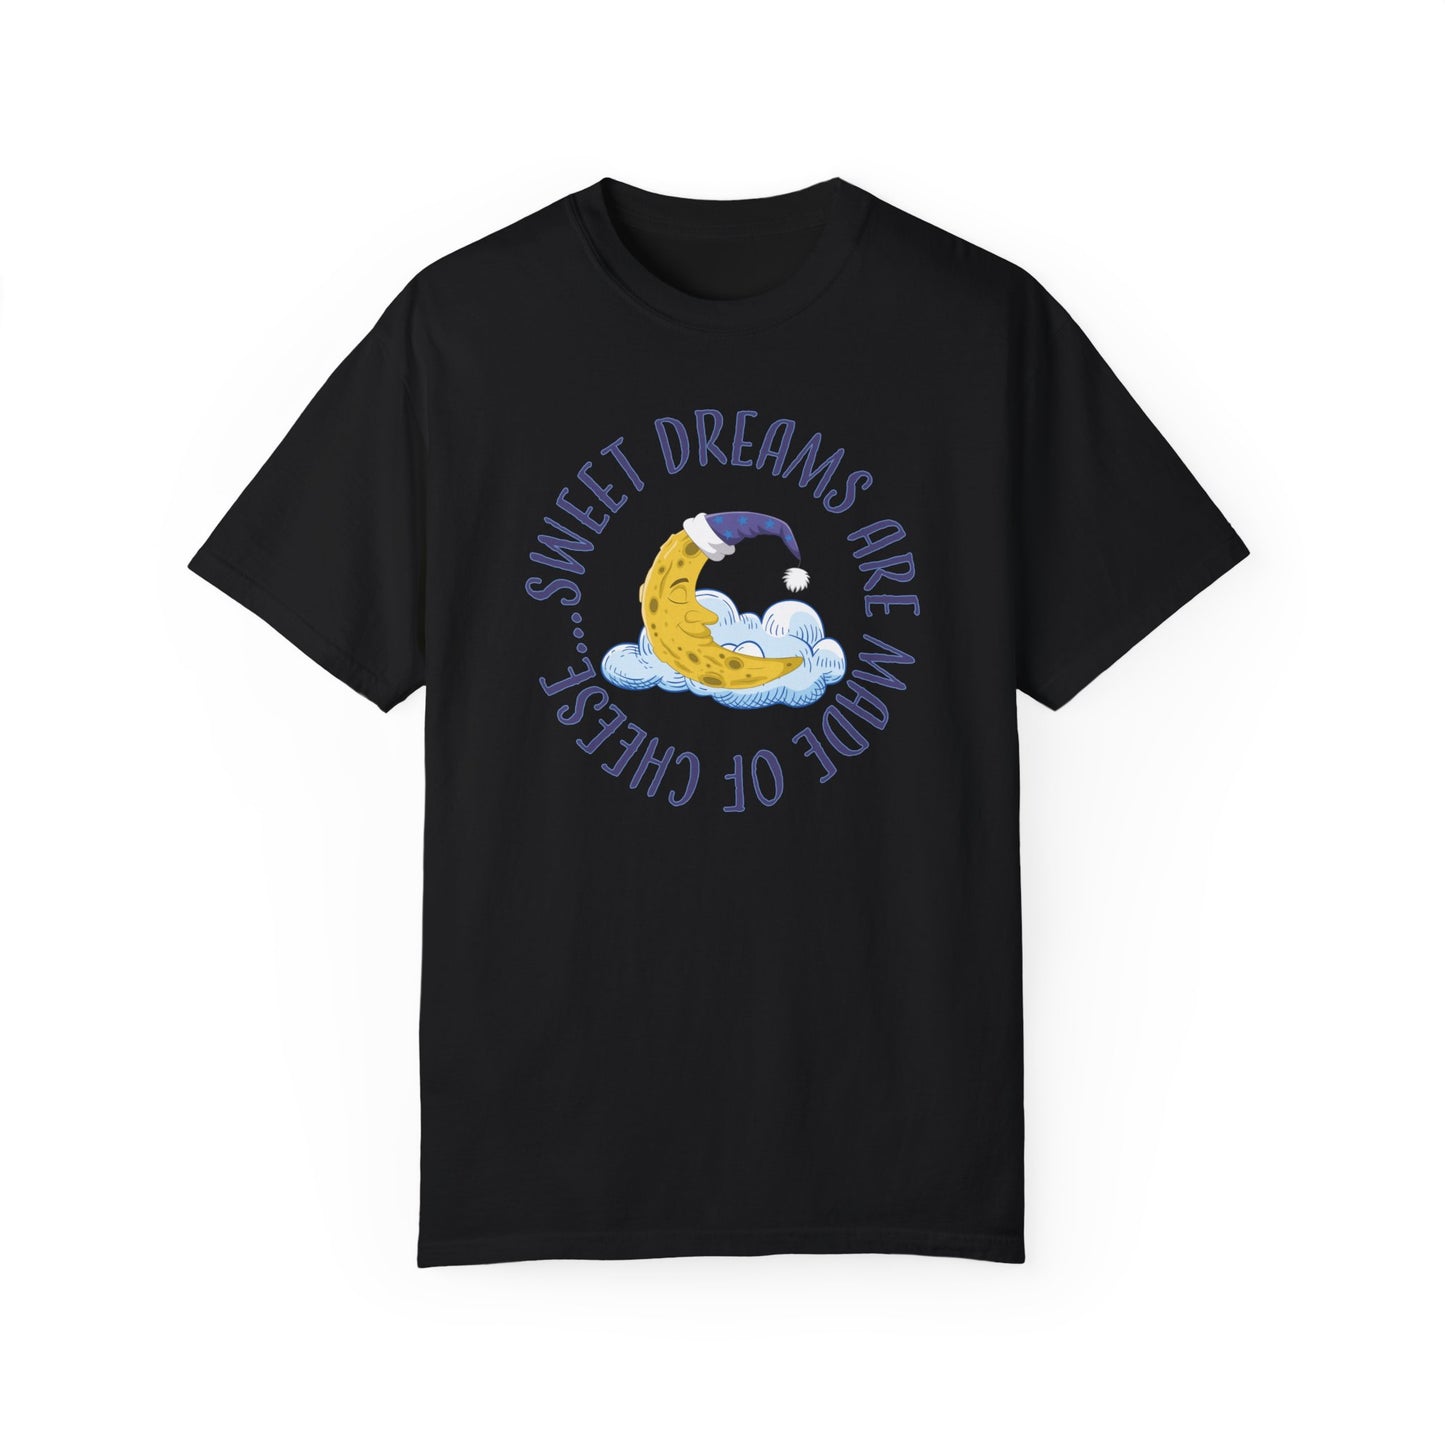 Sweet Dreams T-Shirt For Man In The Moon T Shirt For Lunar Cheese TShirt For Sleep Shirt Gift